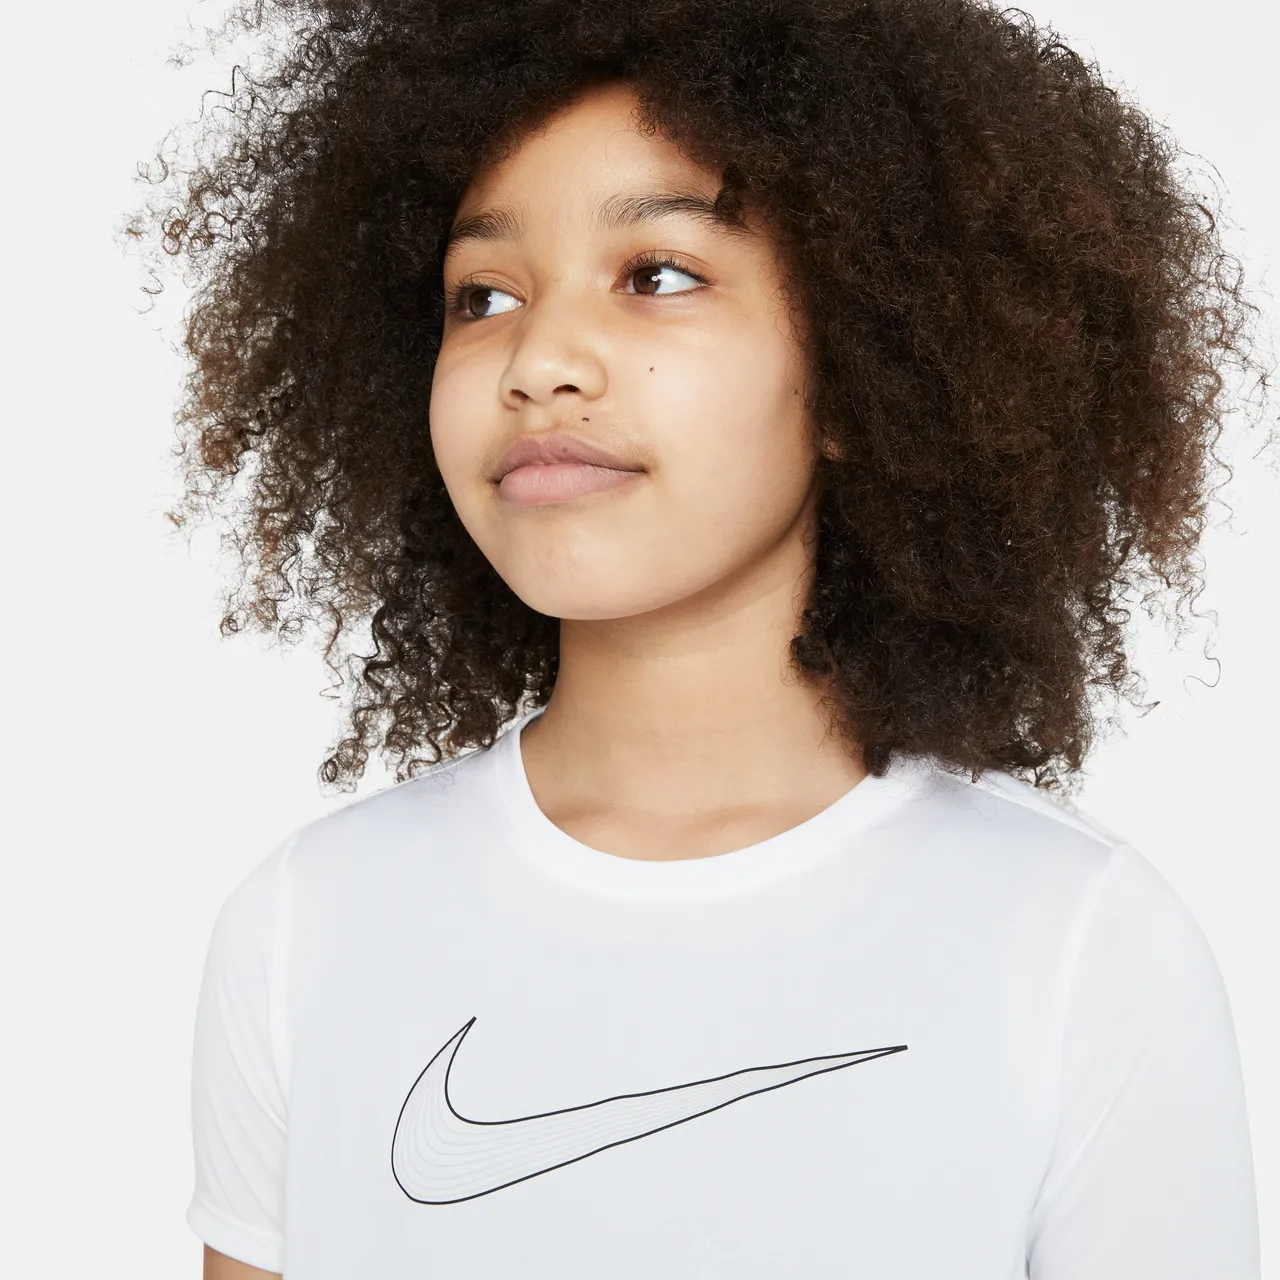 Nike One Older Kids' (Girls') Dri-FIT Short-Sleeve Training Top - White - Polyester